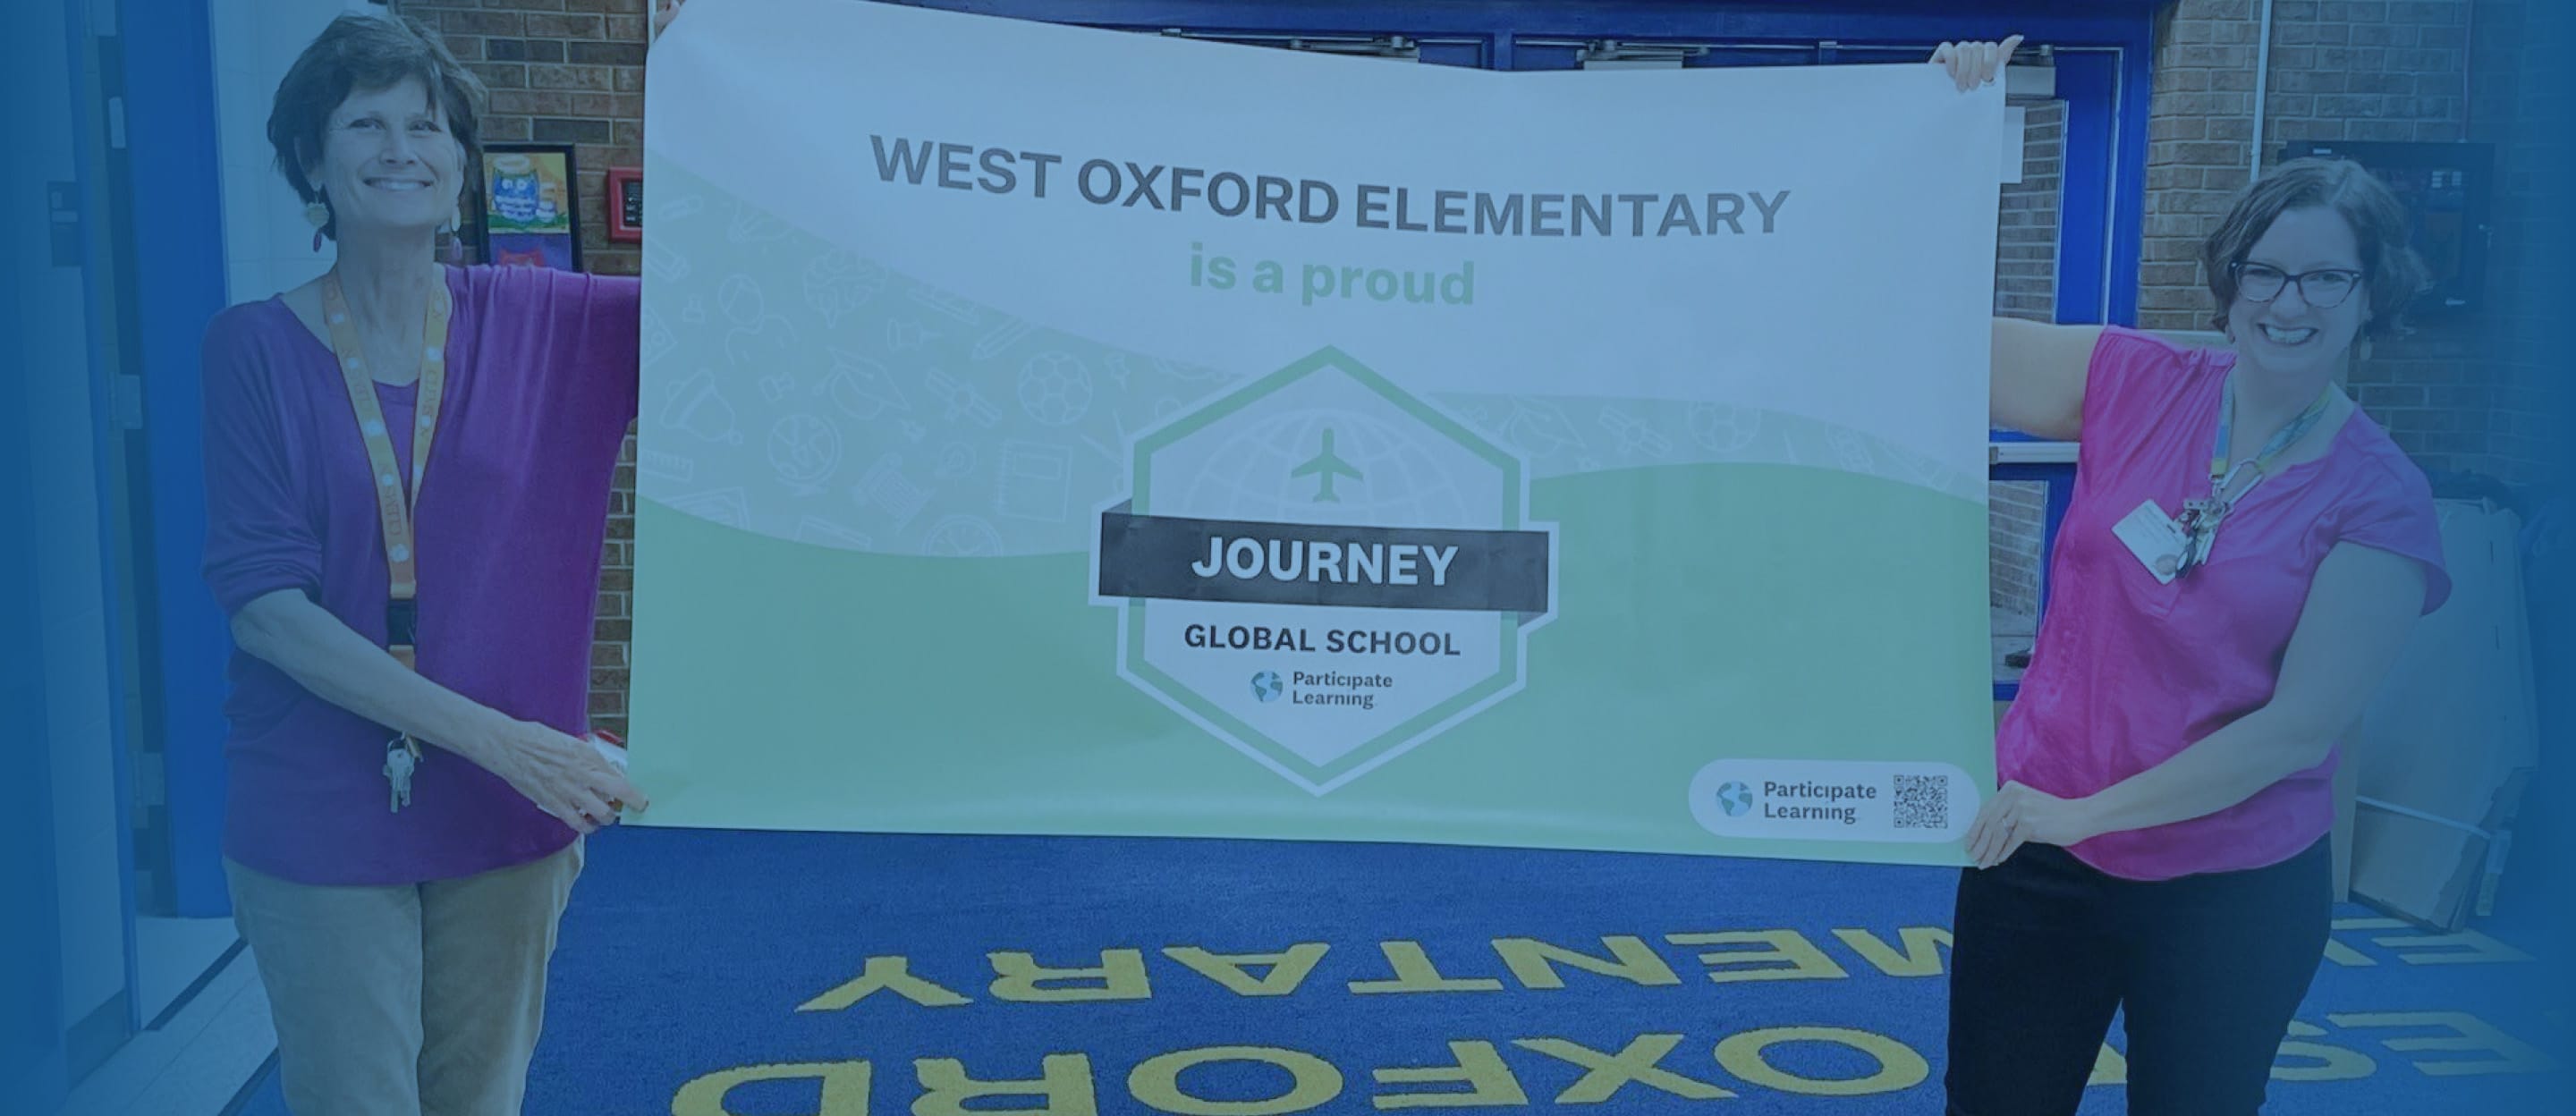 West Oxford Elementary is a global school